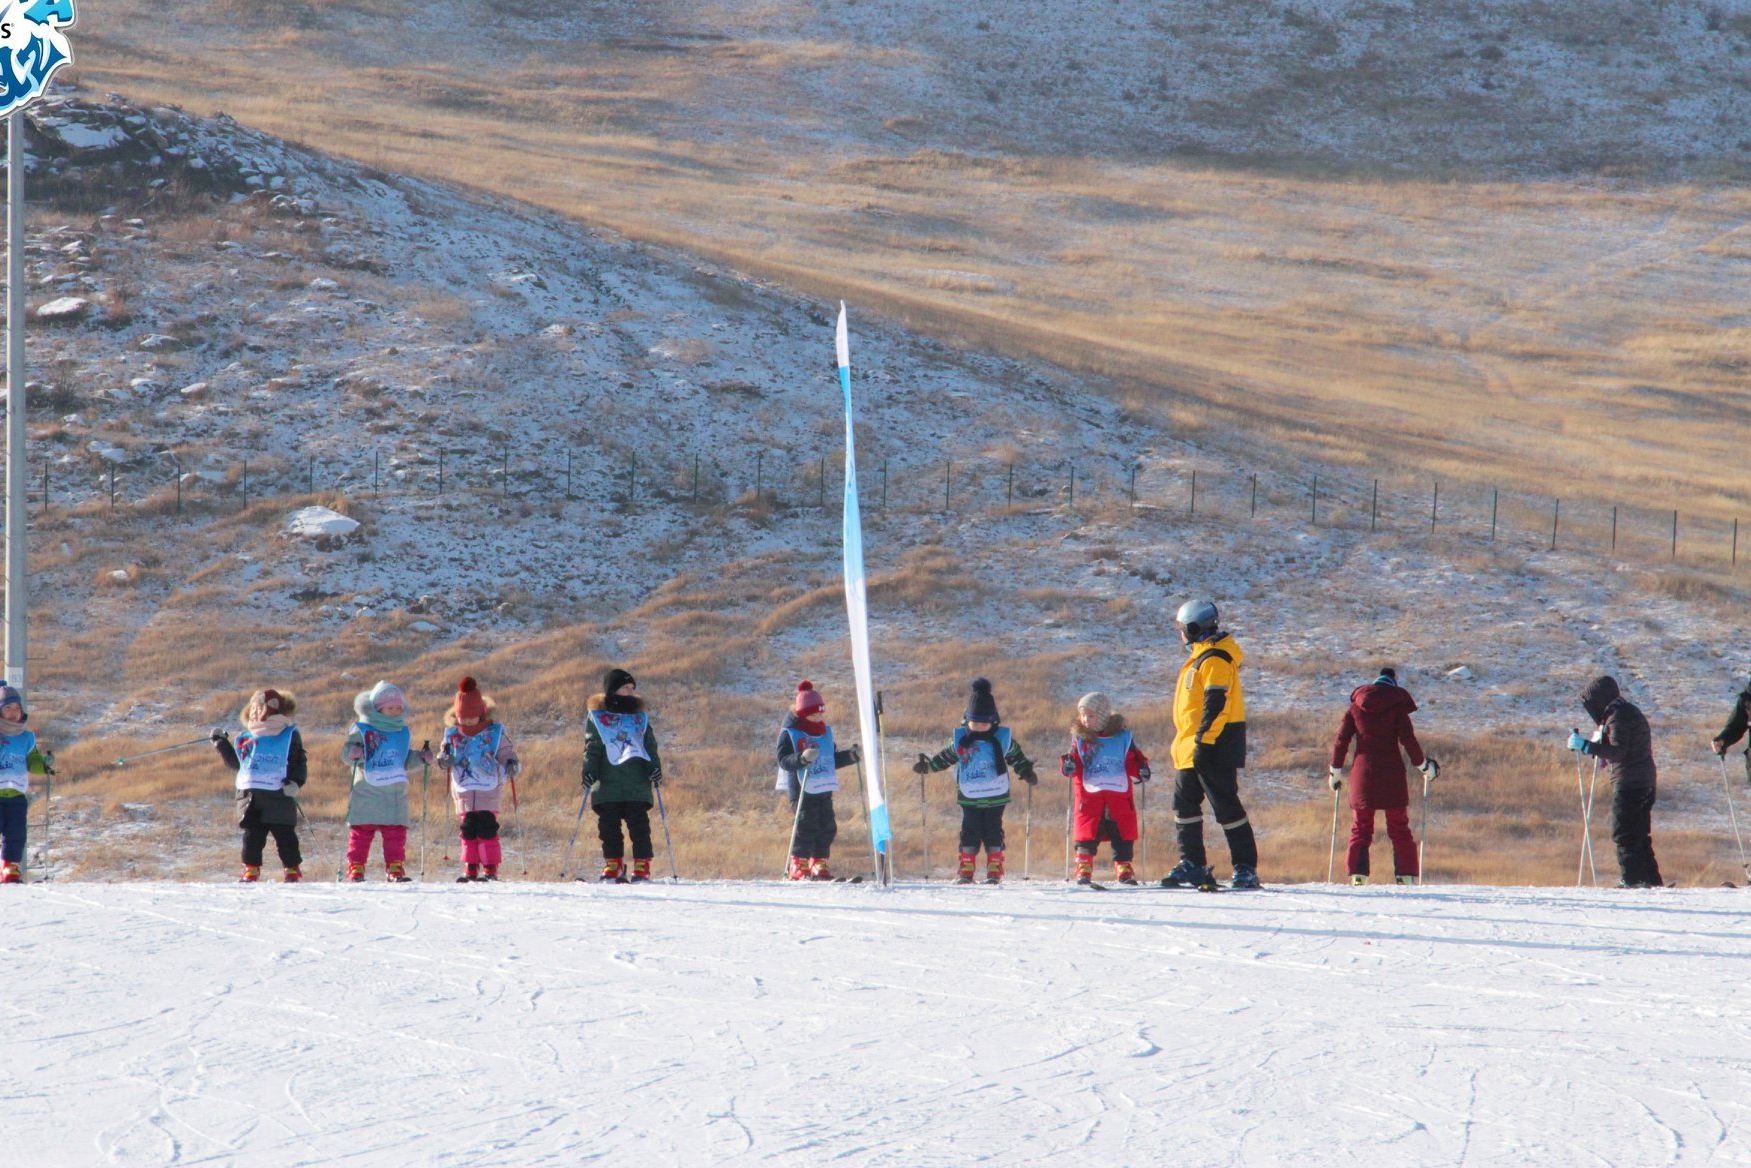 Winter sports in Mongolia